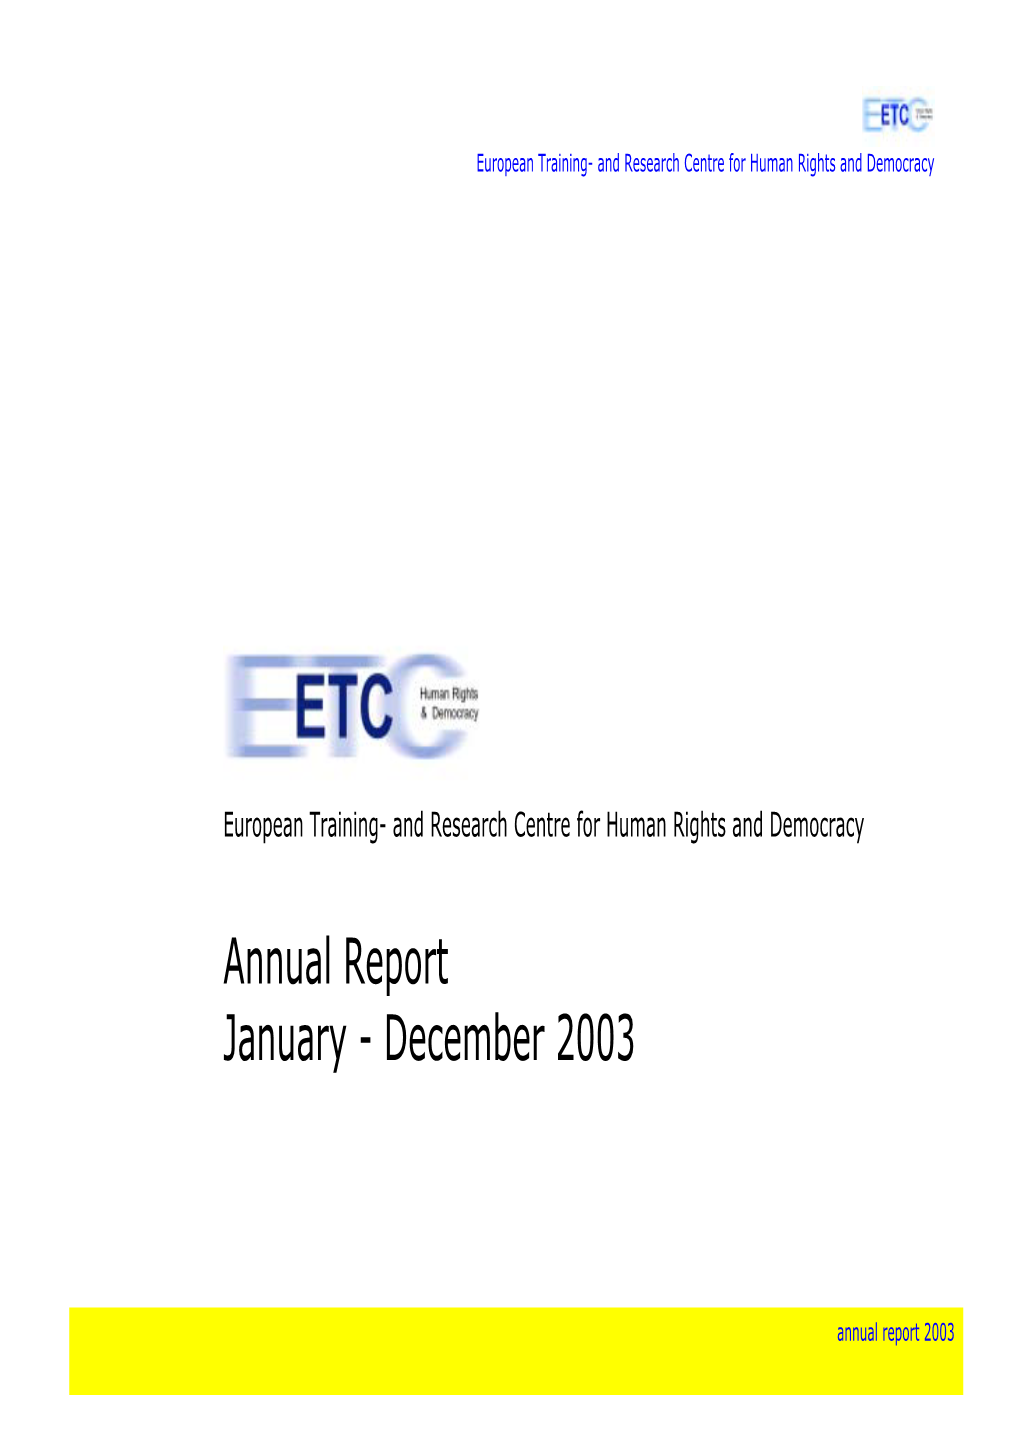 Annual Report January - December 2003